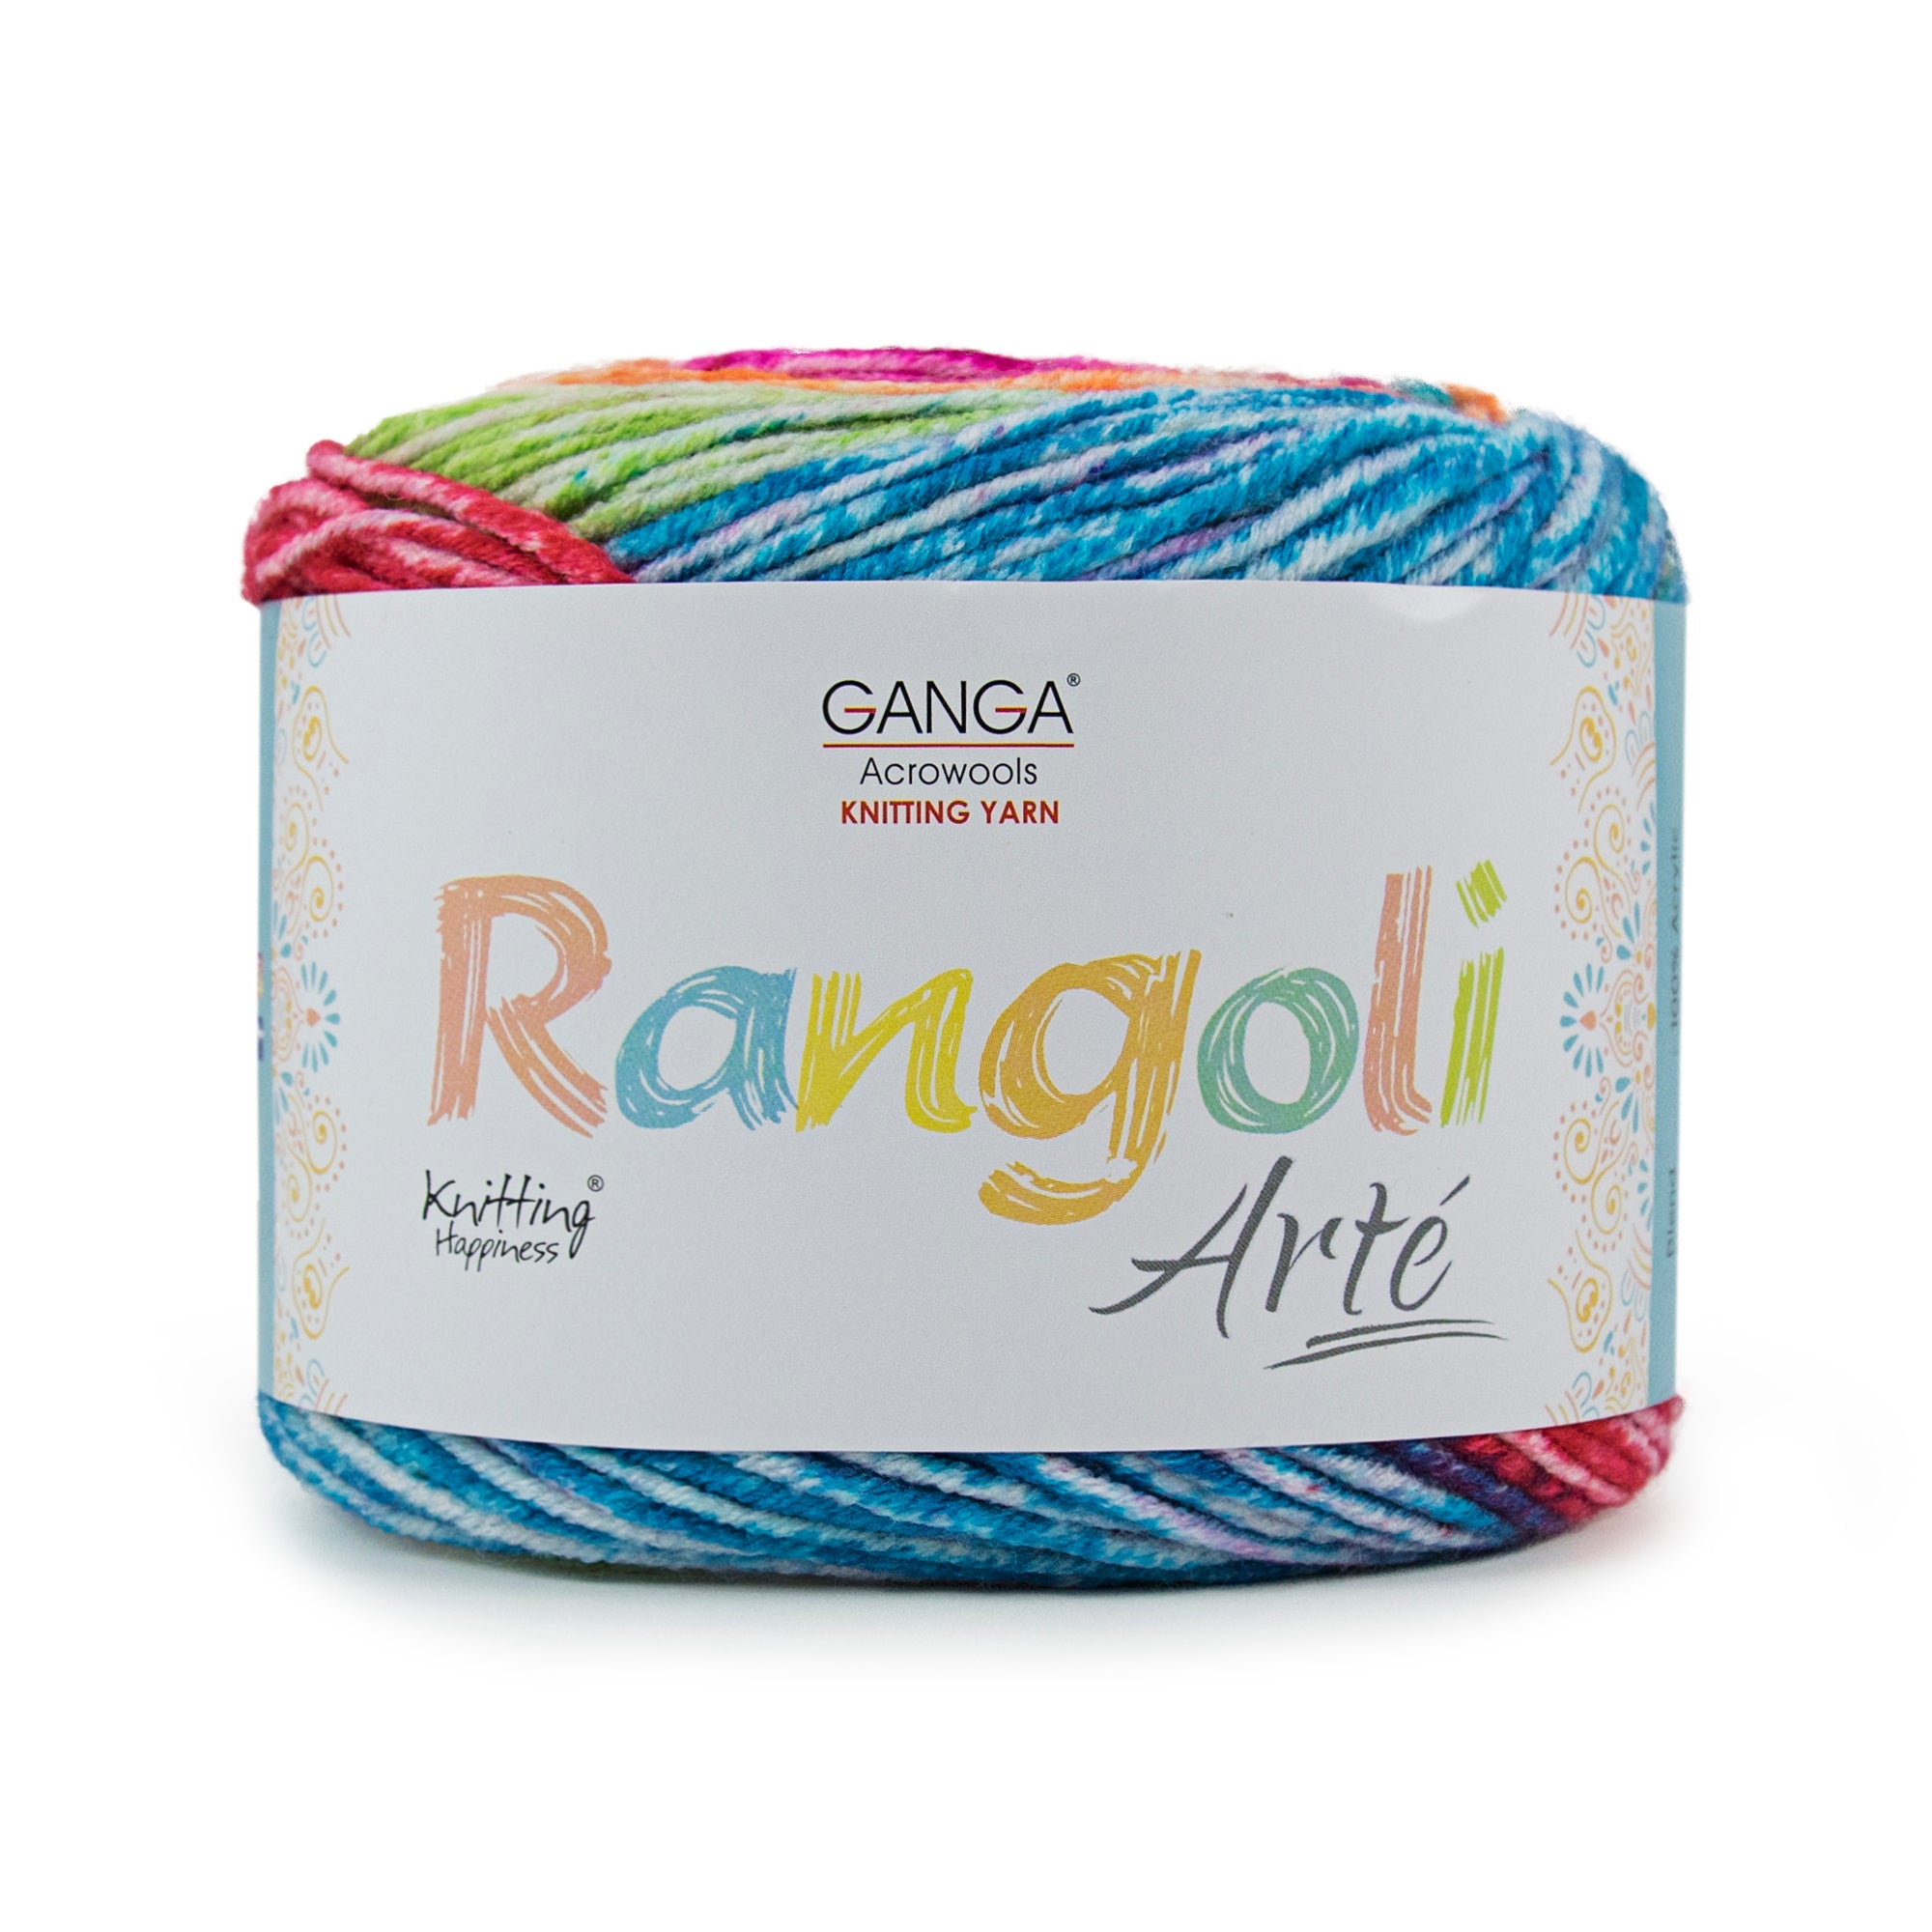 Rangoli Arte Knitting Yarn